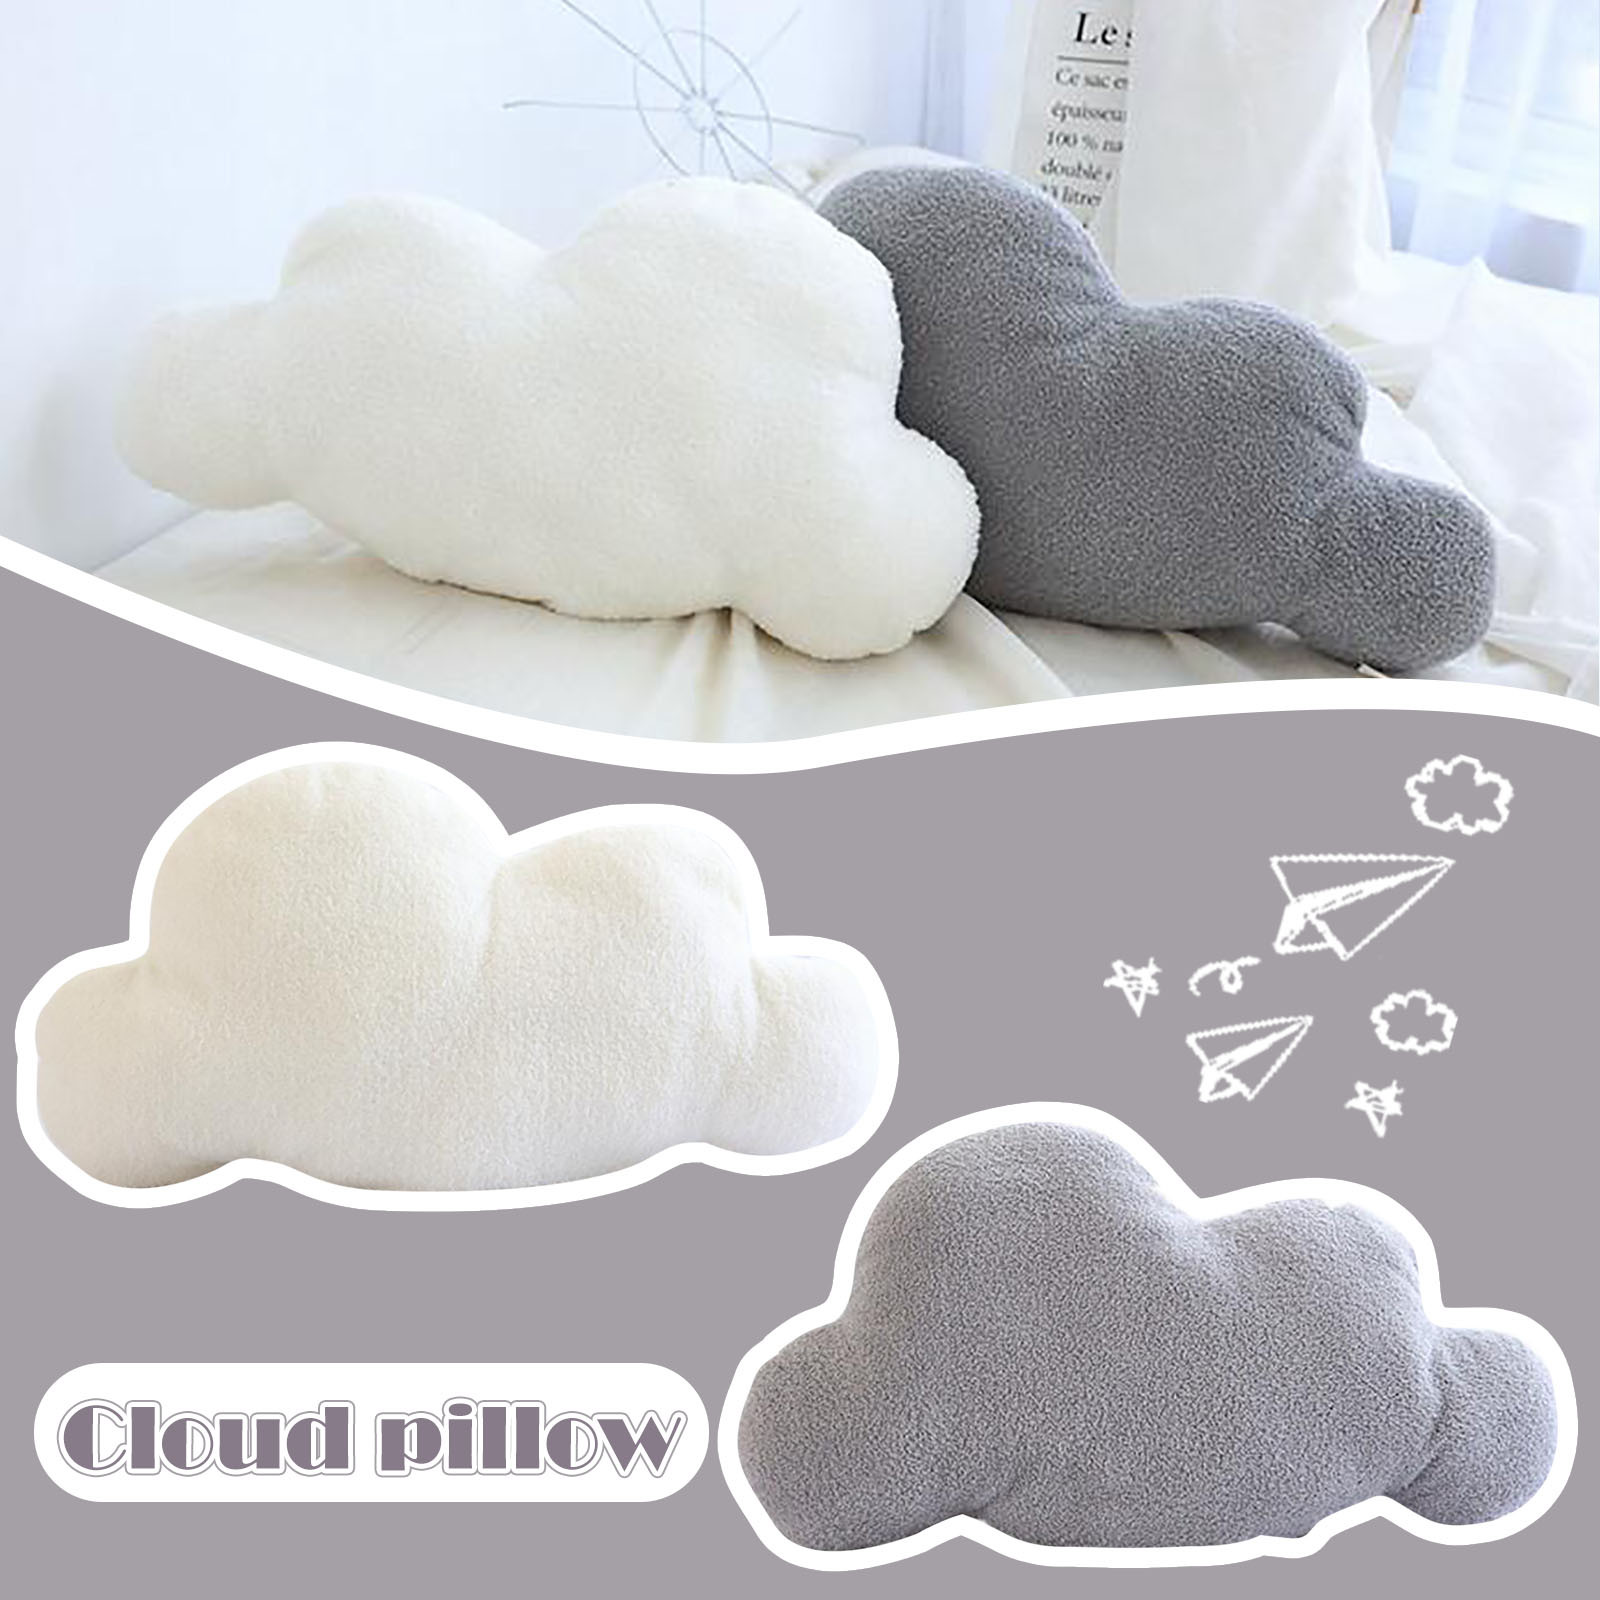 Fridja Soft Velvet Cloud Outdoor Pillow Soft Car Plush Nap Pillow Sofa Cushion Girls Kids Cloud Pillow Cartoon Clouds Shaped Throw Pillows - image 4 of 4